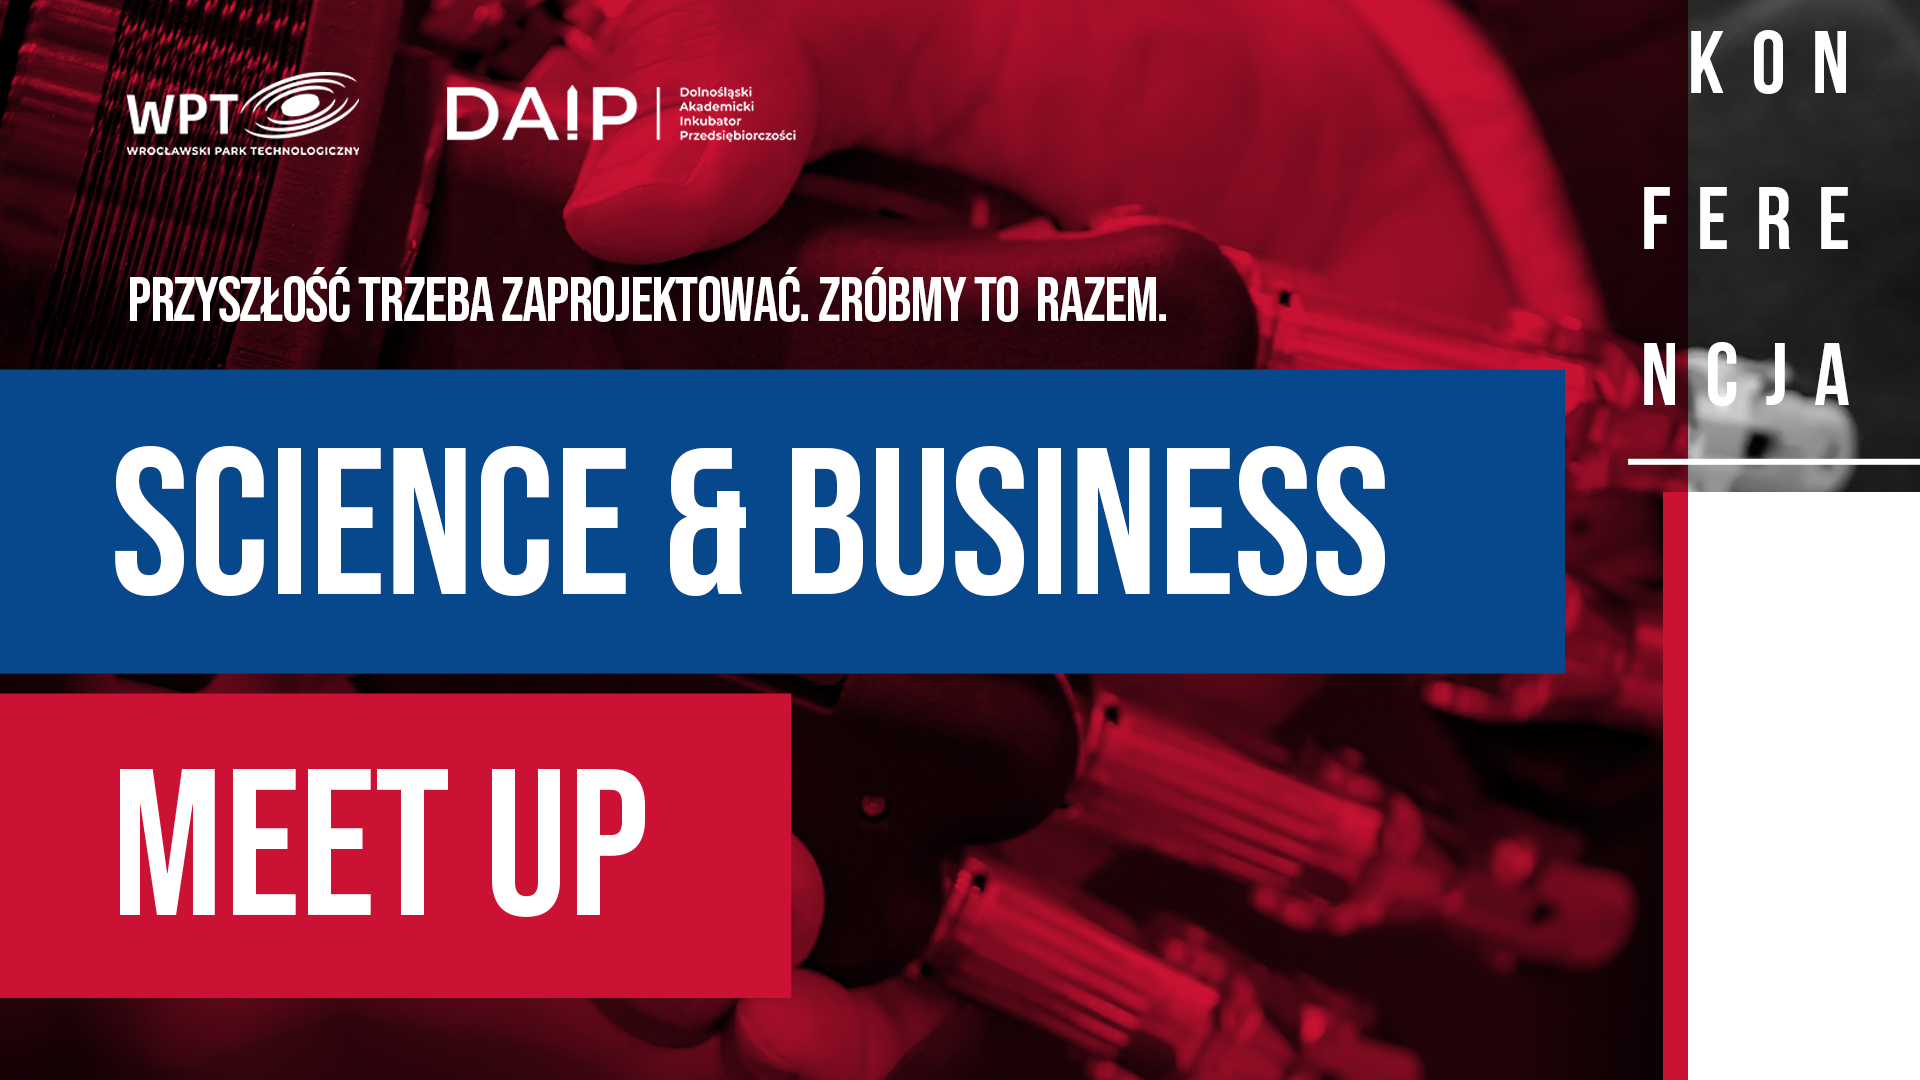 Science & Business MeetUp w WPT już 17 marca!